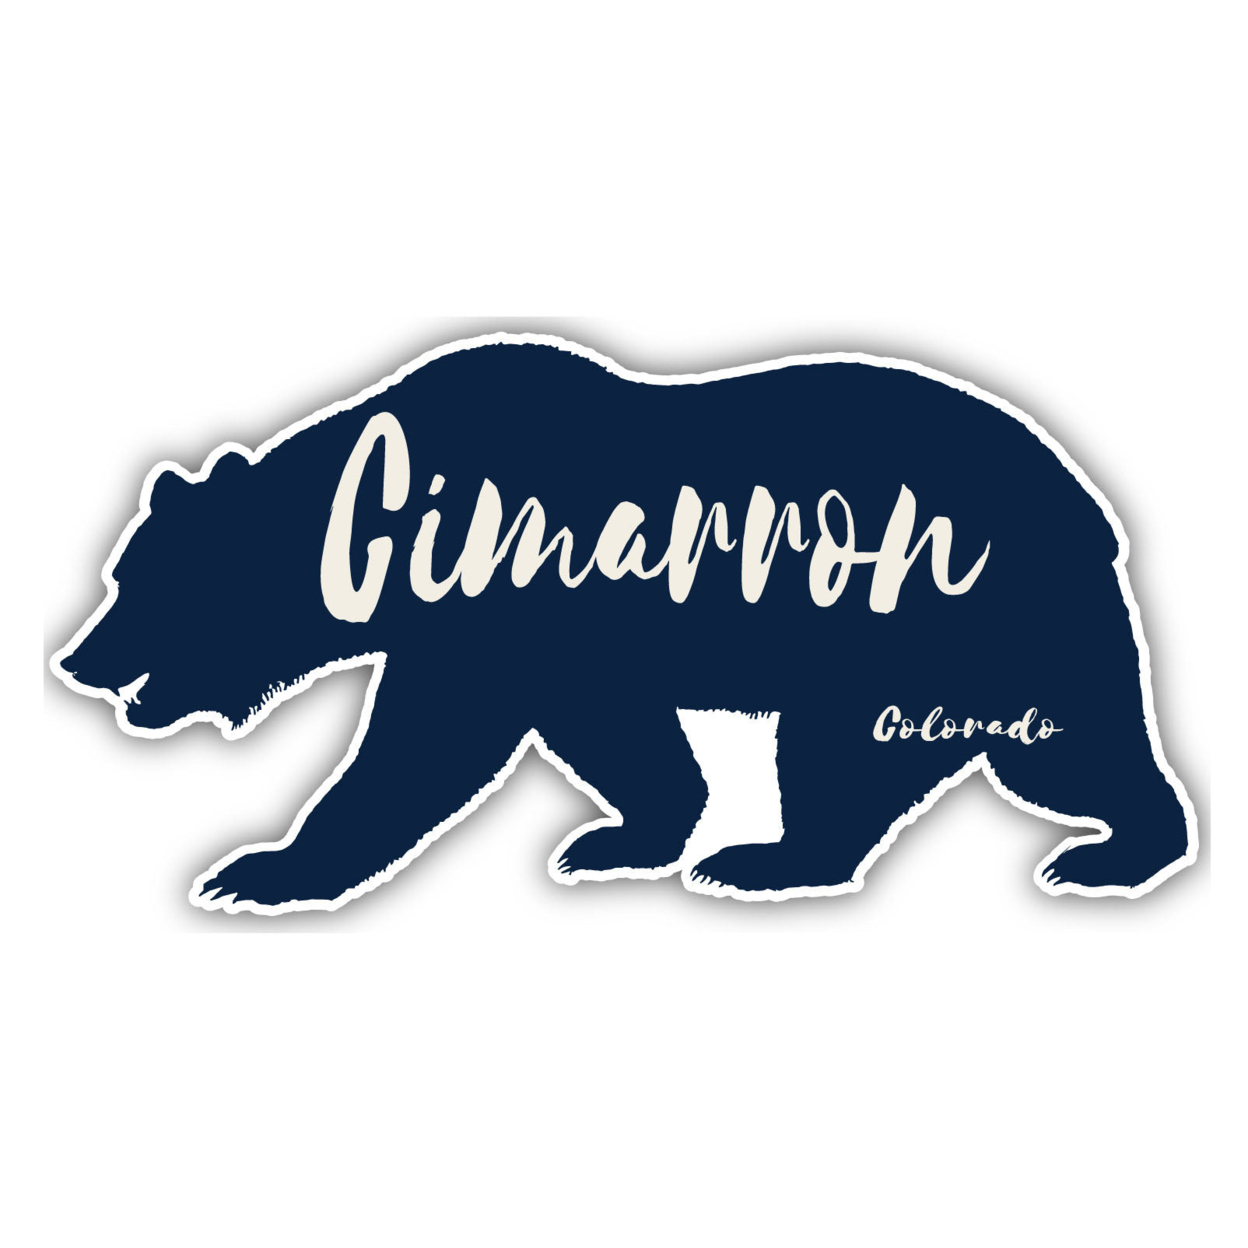 Cimarron Colorado Souvenir Decorative Stickers (Choose Theme And Size) - 4-Pack, 6-Inch, Bear